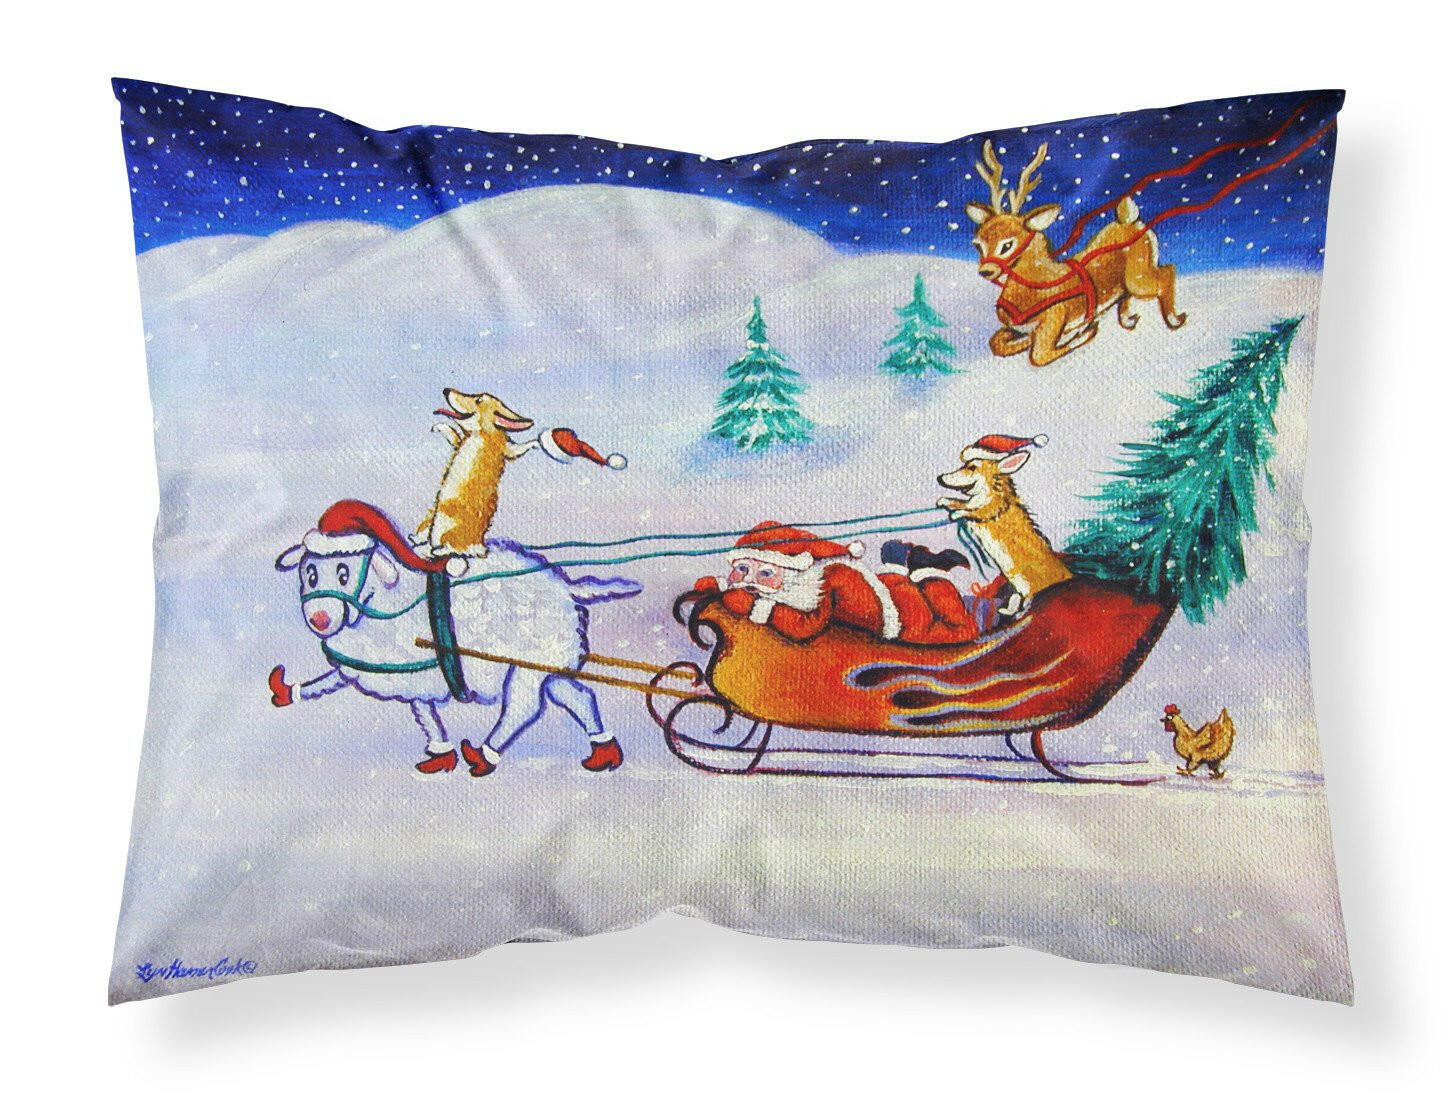 Corgi Highhacked Santa Claus Sleigh Fabric Standard Pillowcase 7442PILLOWCASE by Caroline's Treasures